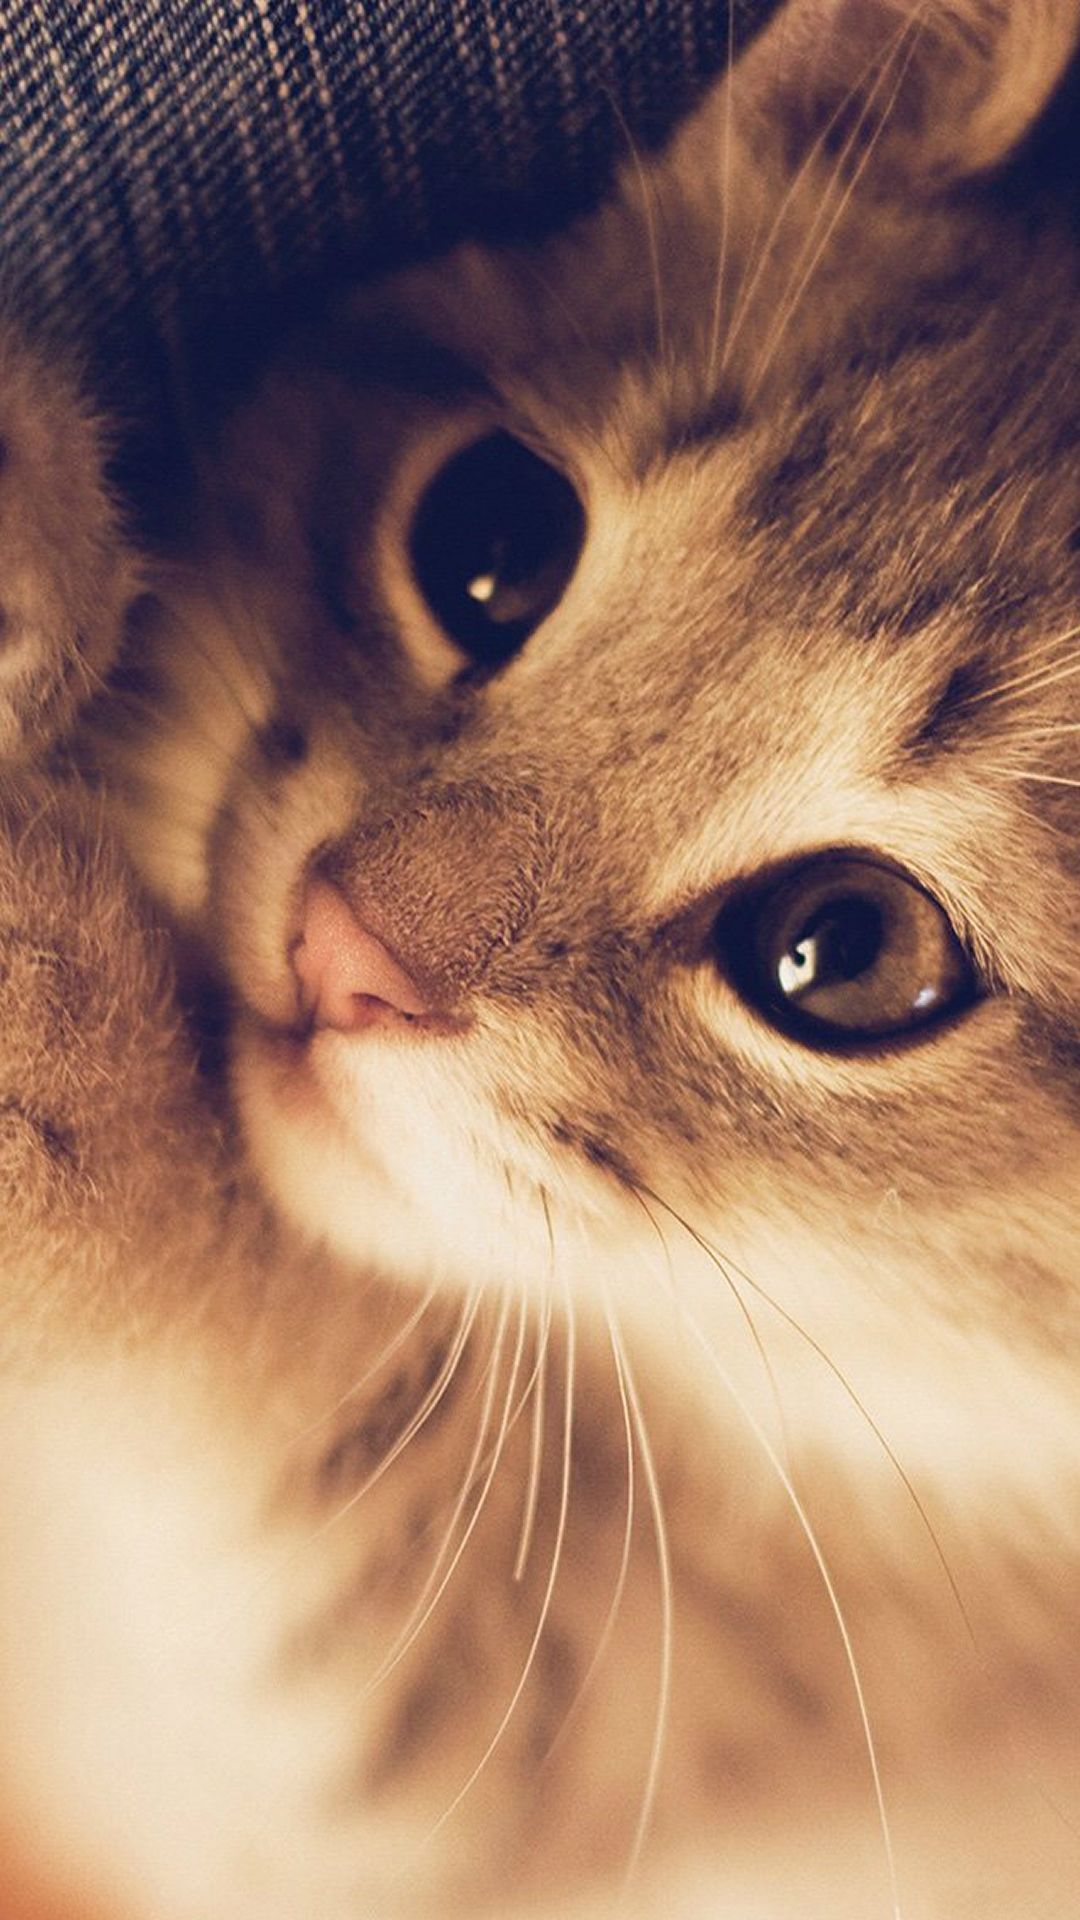 Cute Cat Wallpapers - Top 25 Best Cute Cat Backgrounds Download